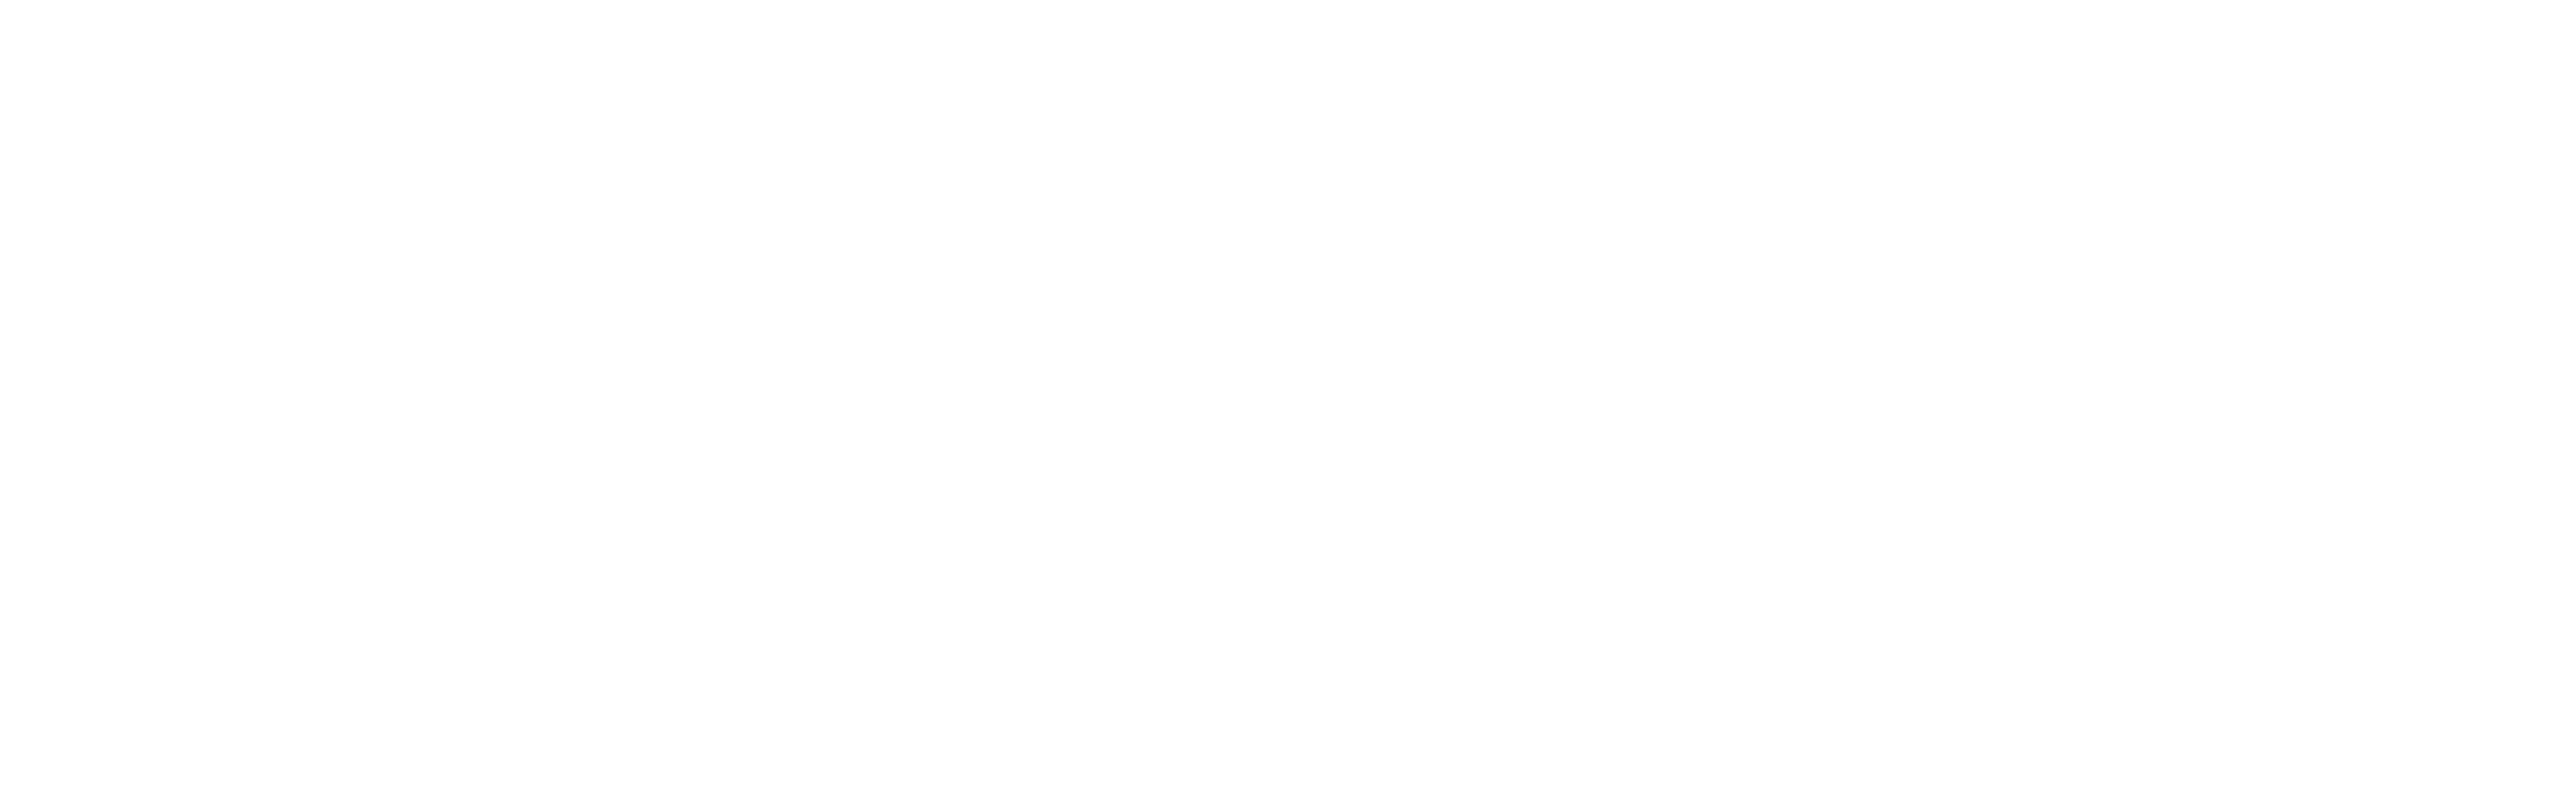 XStar logo